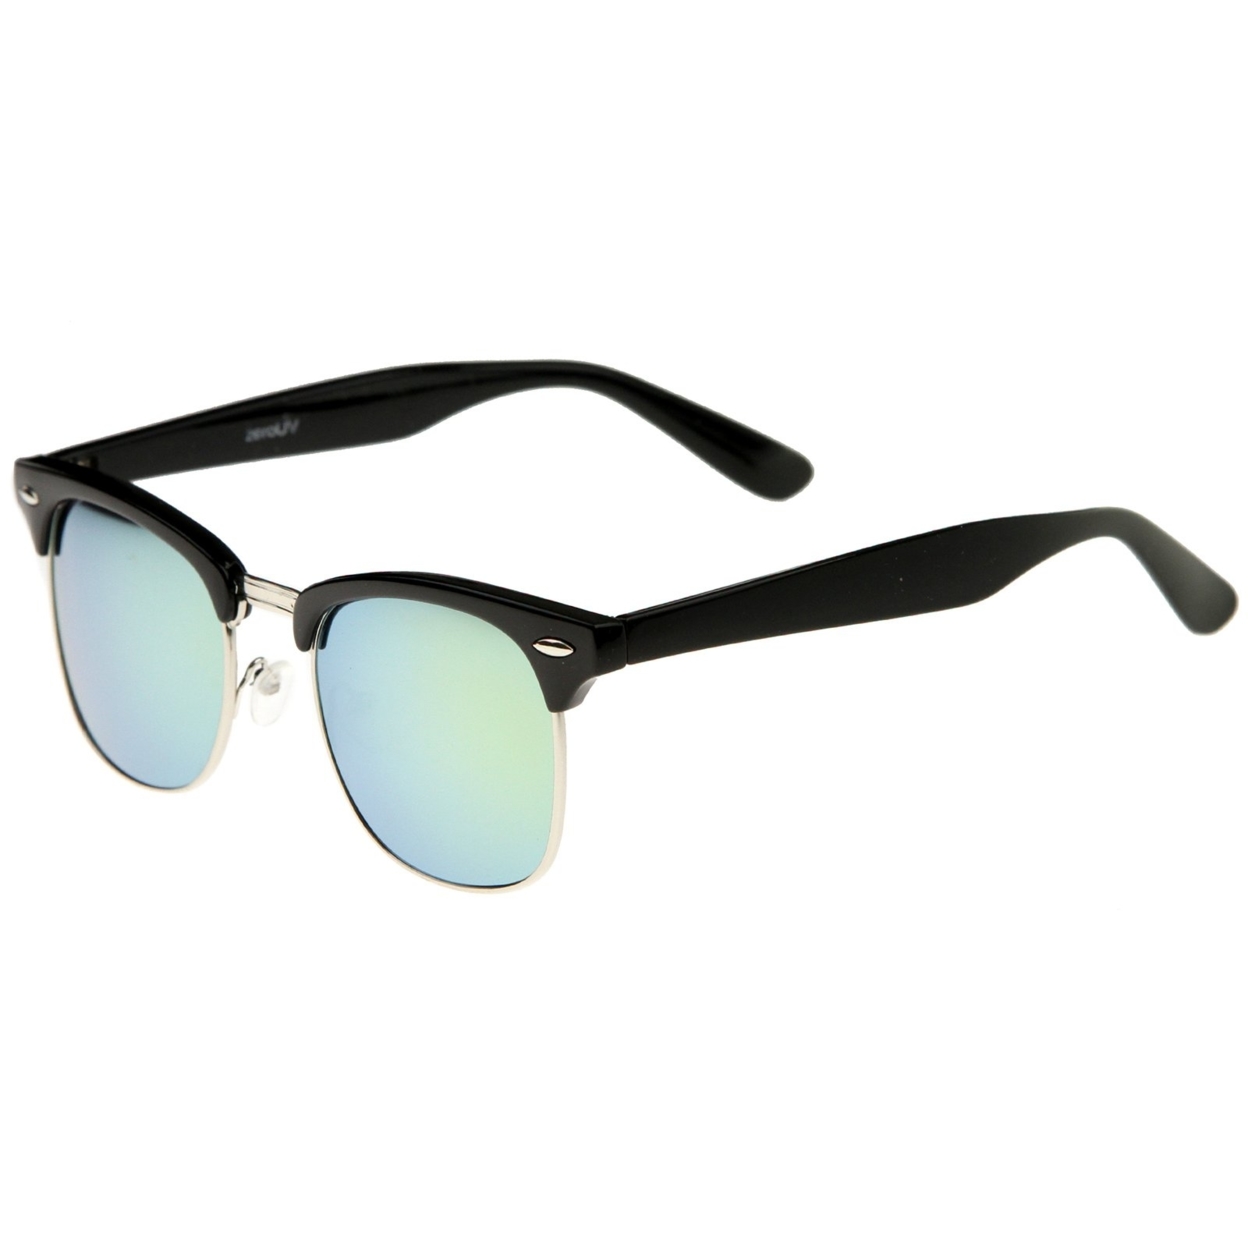 Premium Half Frame Colored Mirror Lens Horn Rimmed Sunglasses 50mm - Black-Gold / Yellow Mirror